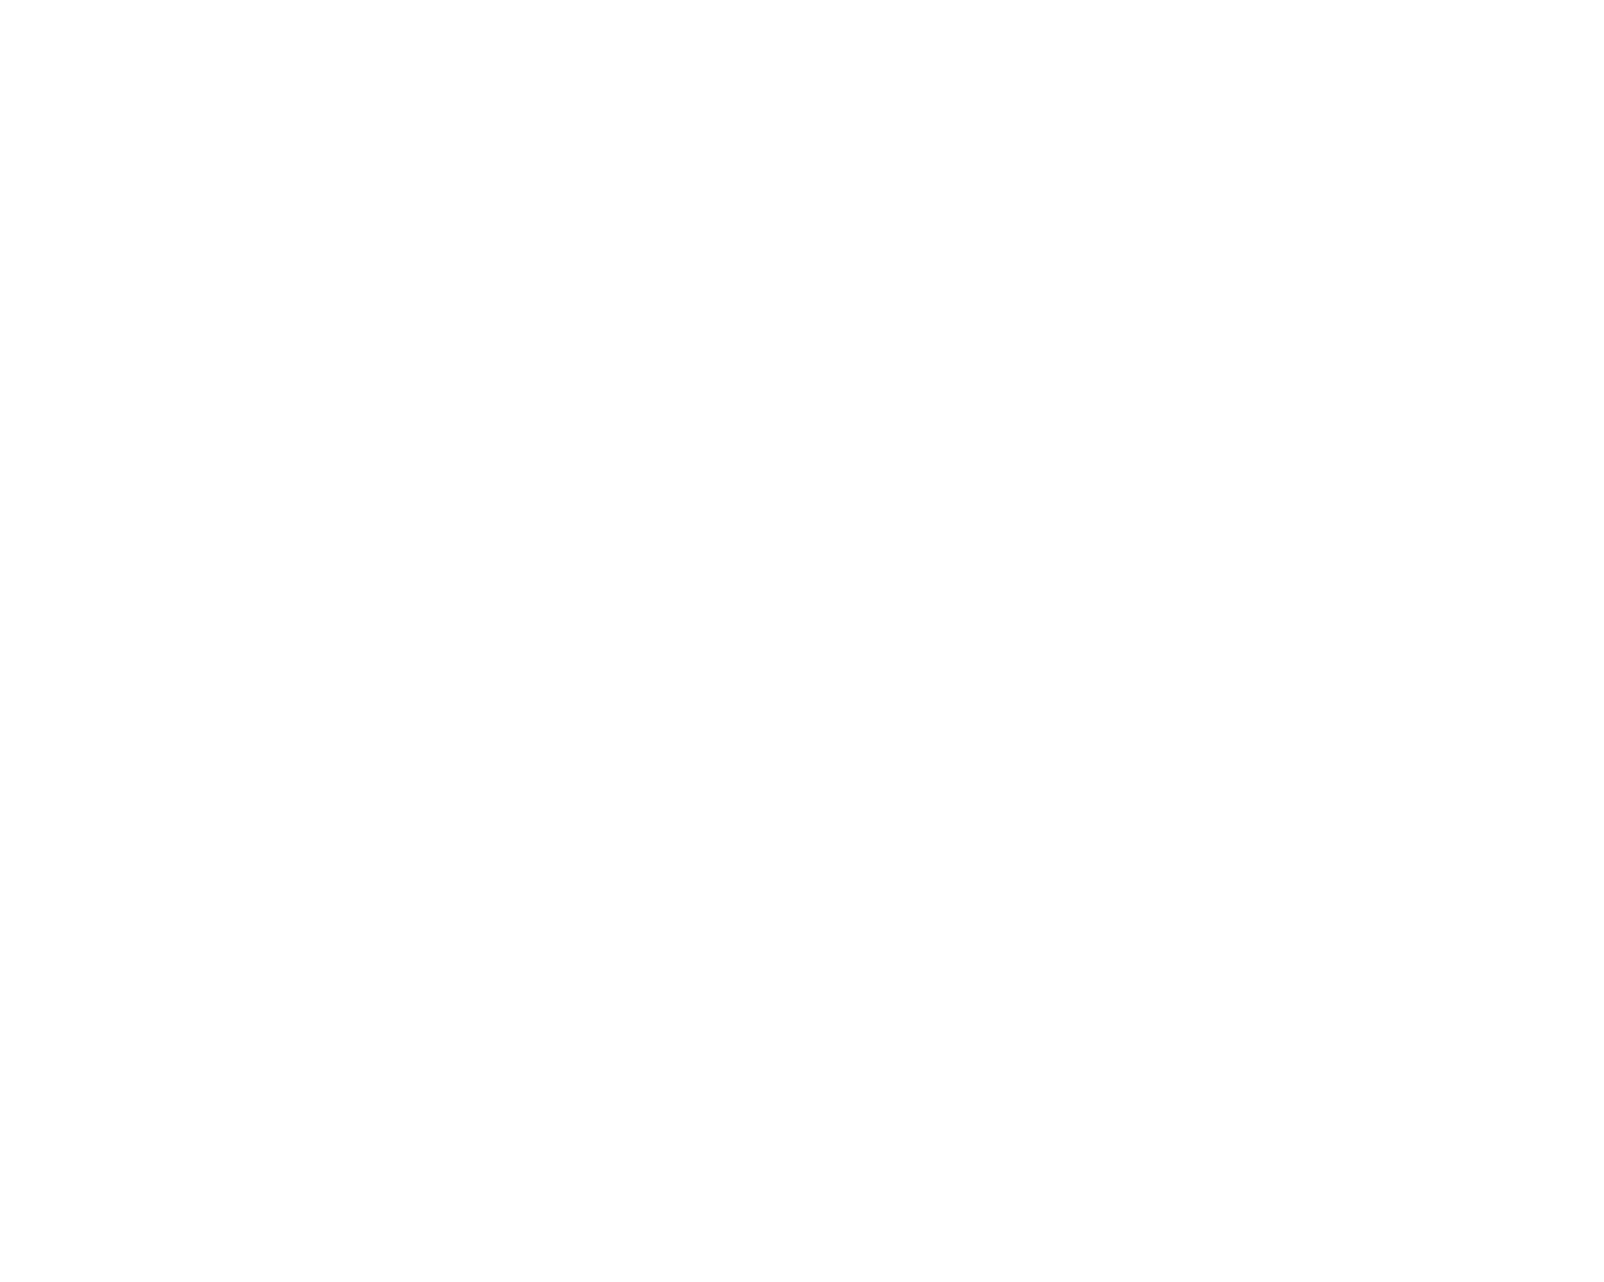 Молдакул Нарымбетов, Воин Света, 2012, автомобильные шины, металл, 350 х 200 см